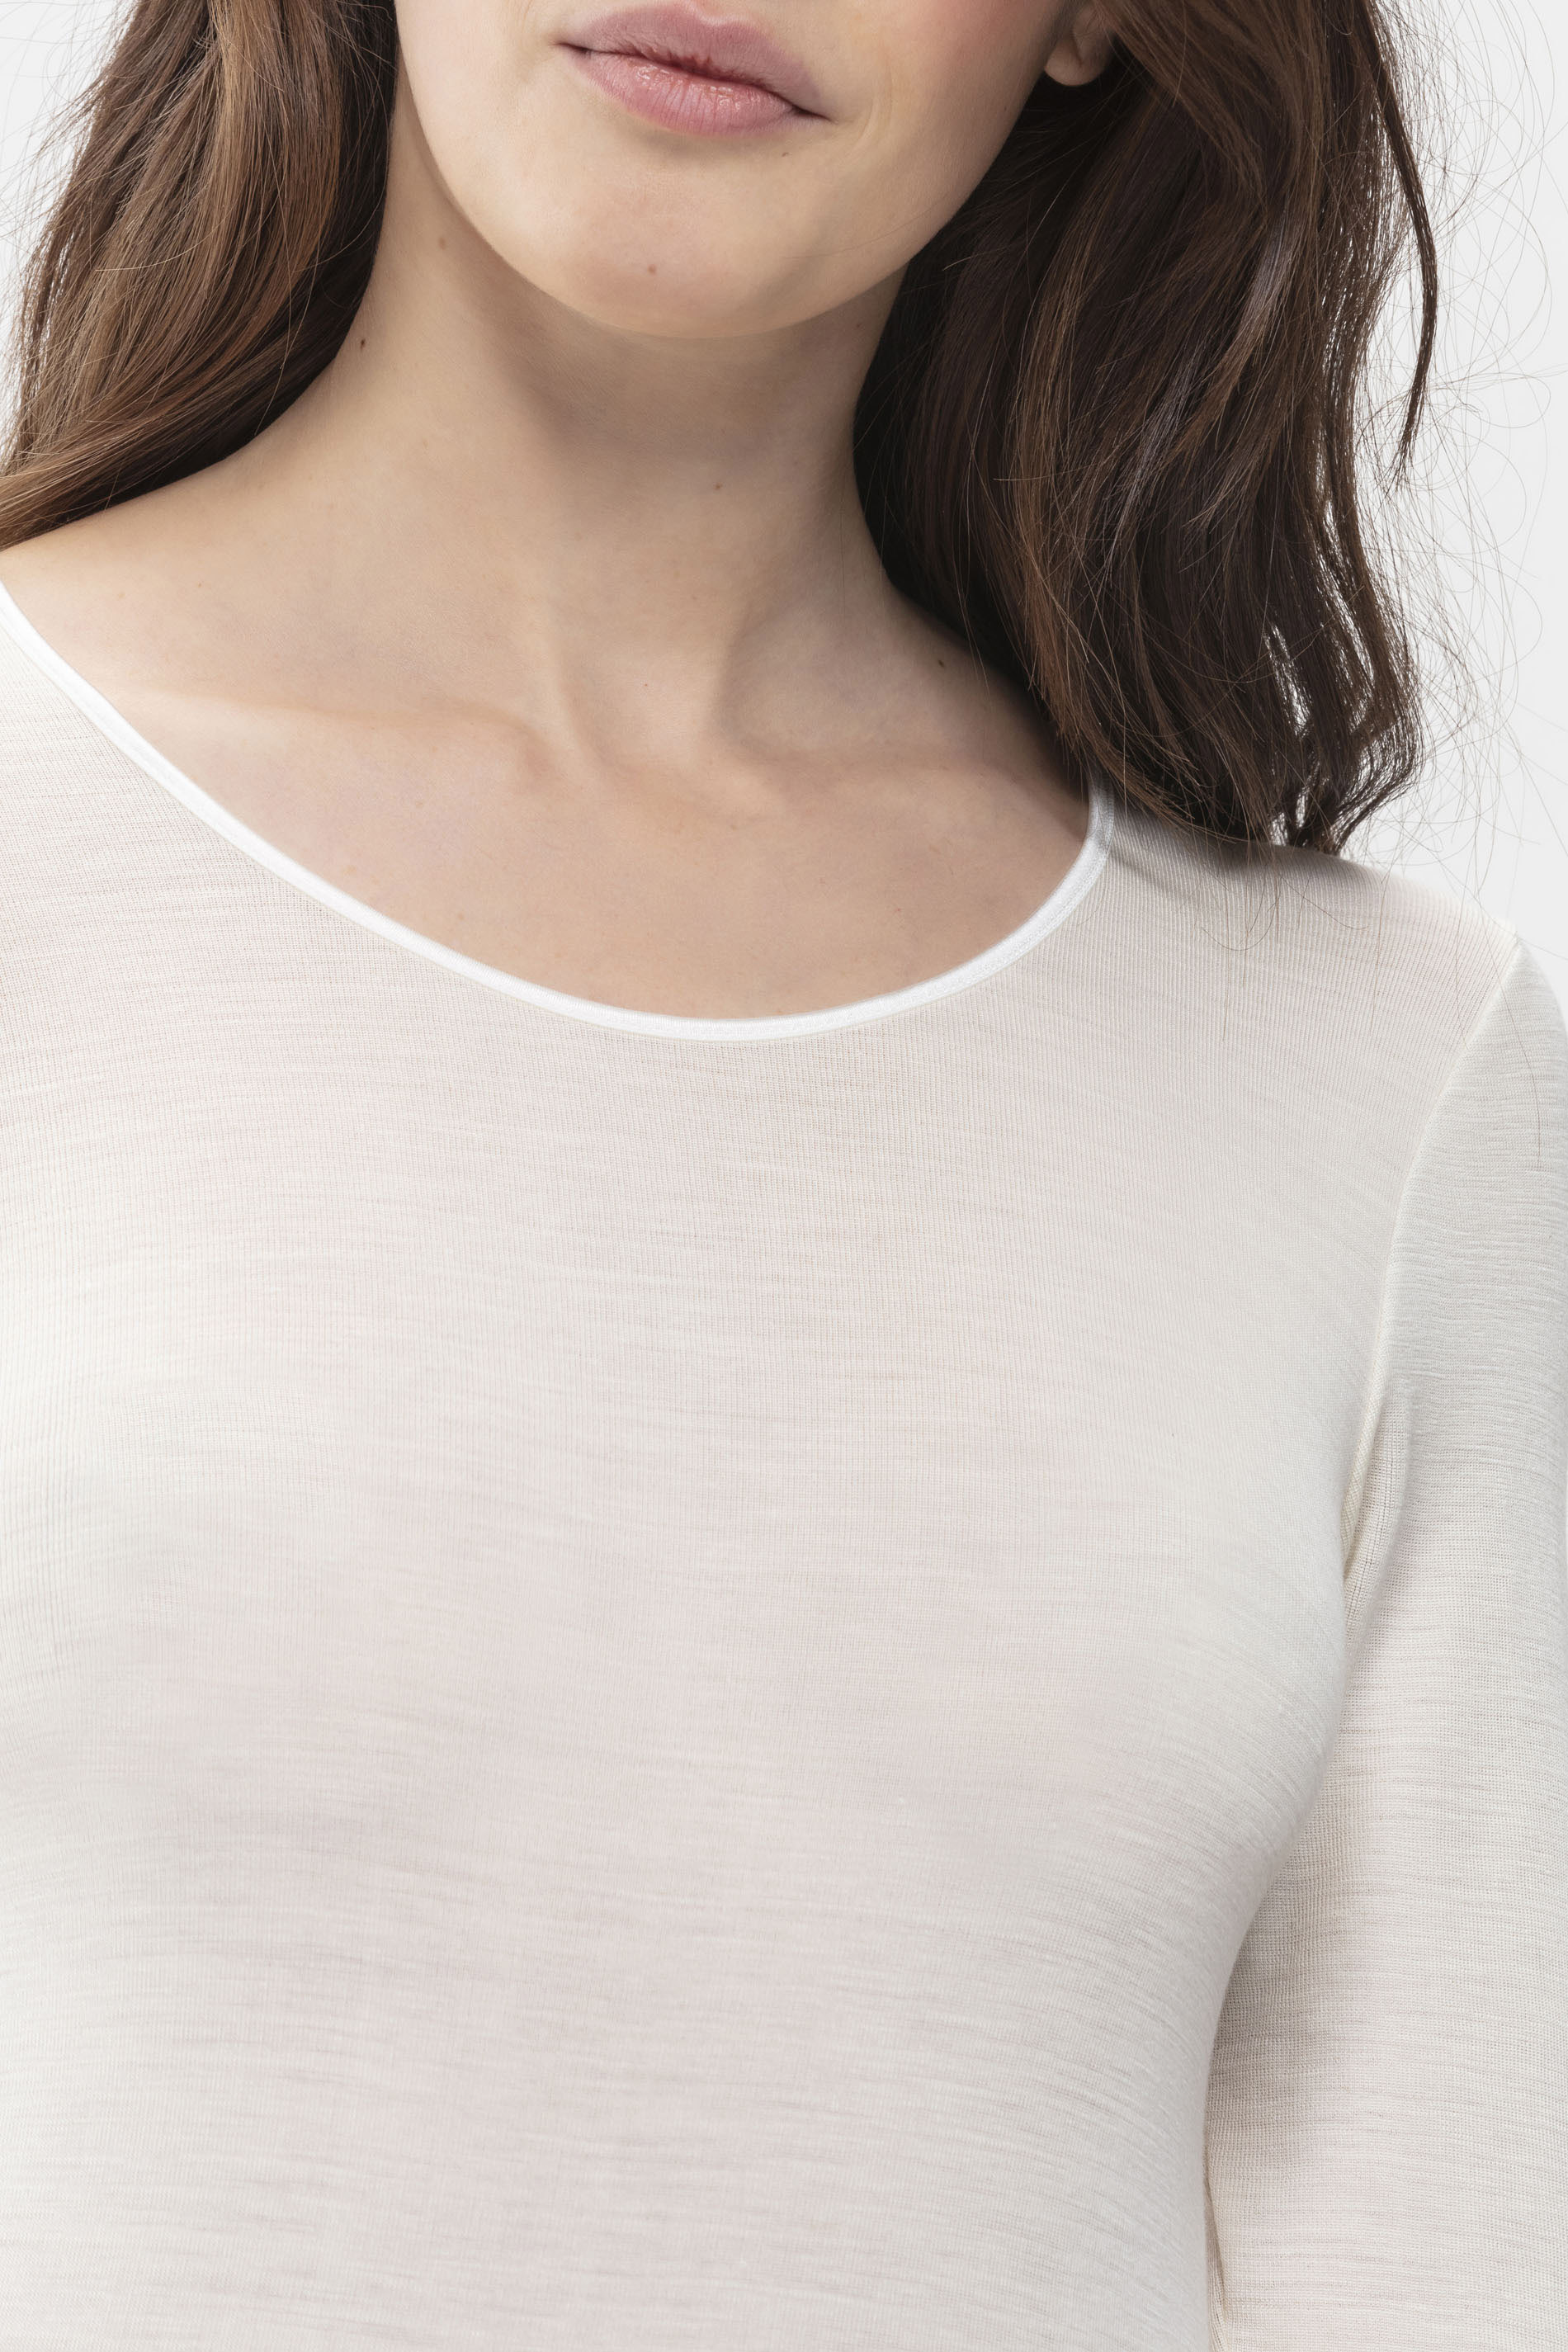 Shirt langarm White Serie Exquisite Detail View 01 | mey®